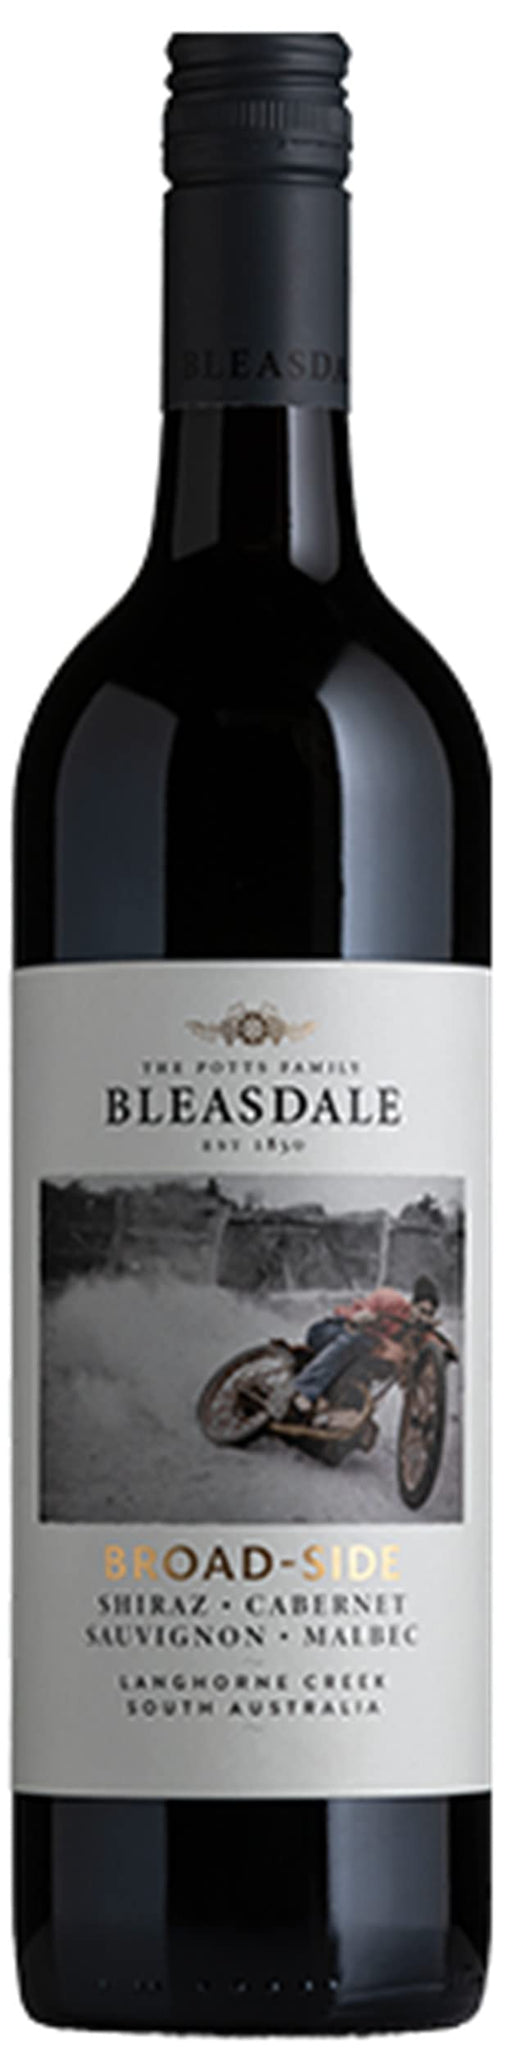 Bleasdale Broad-Side Shiraz Cabernet Sauvignon Malbec 2018 750 ml, Pack of 6  Bleasdale